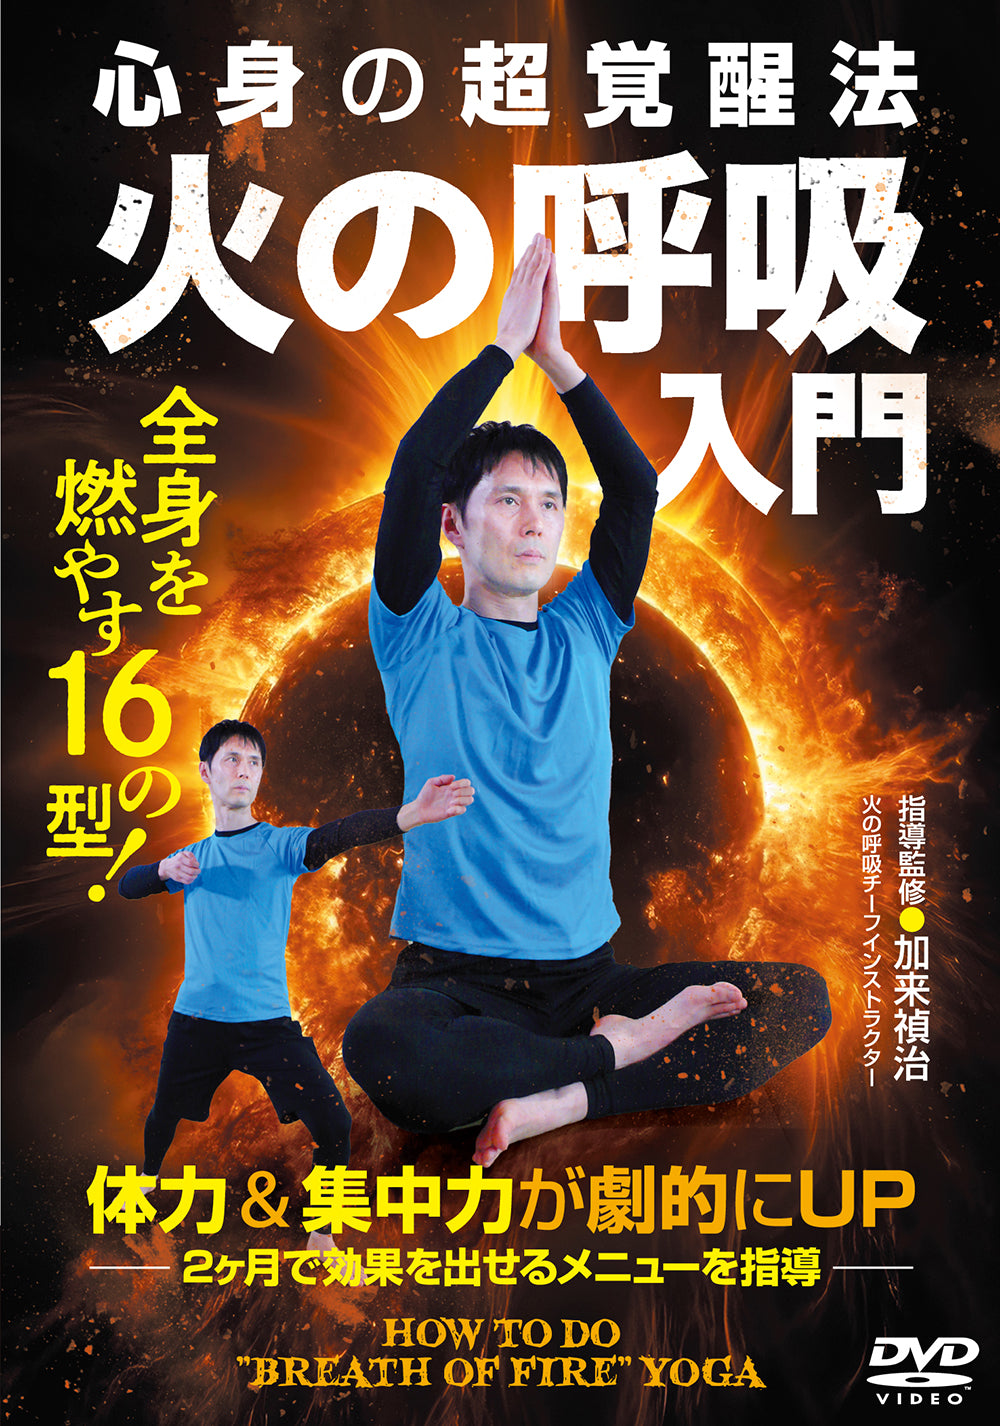 How to do Breath of Fire Yoga DVD by Teiji Kaku